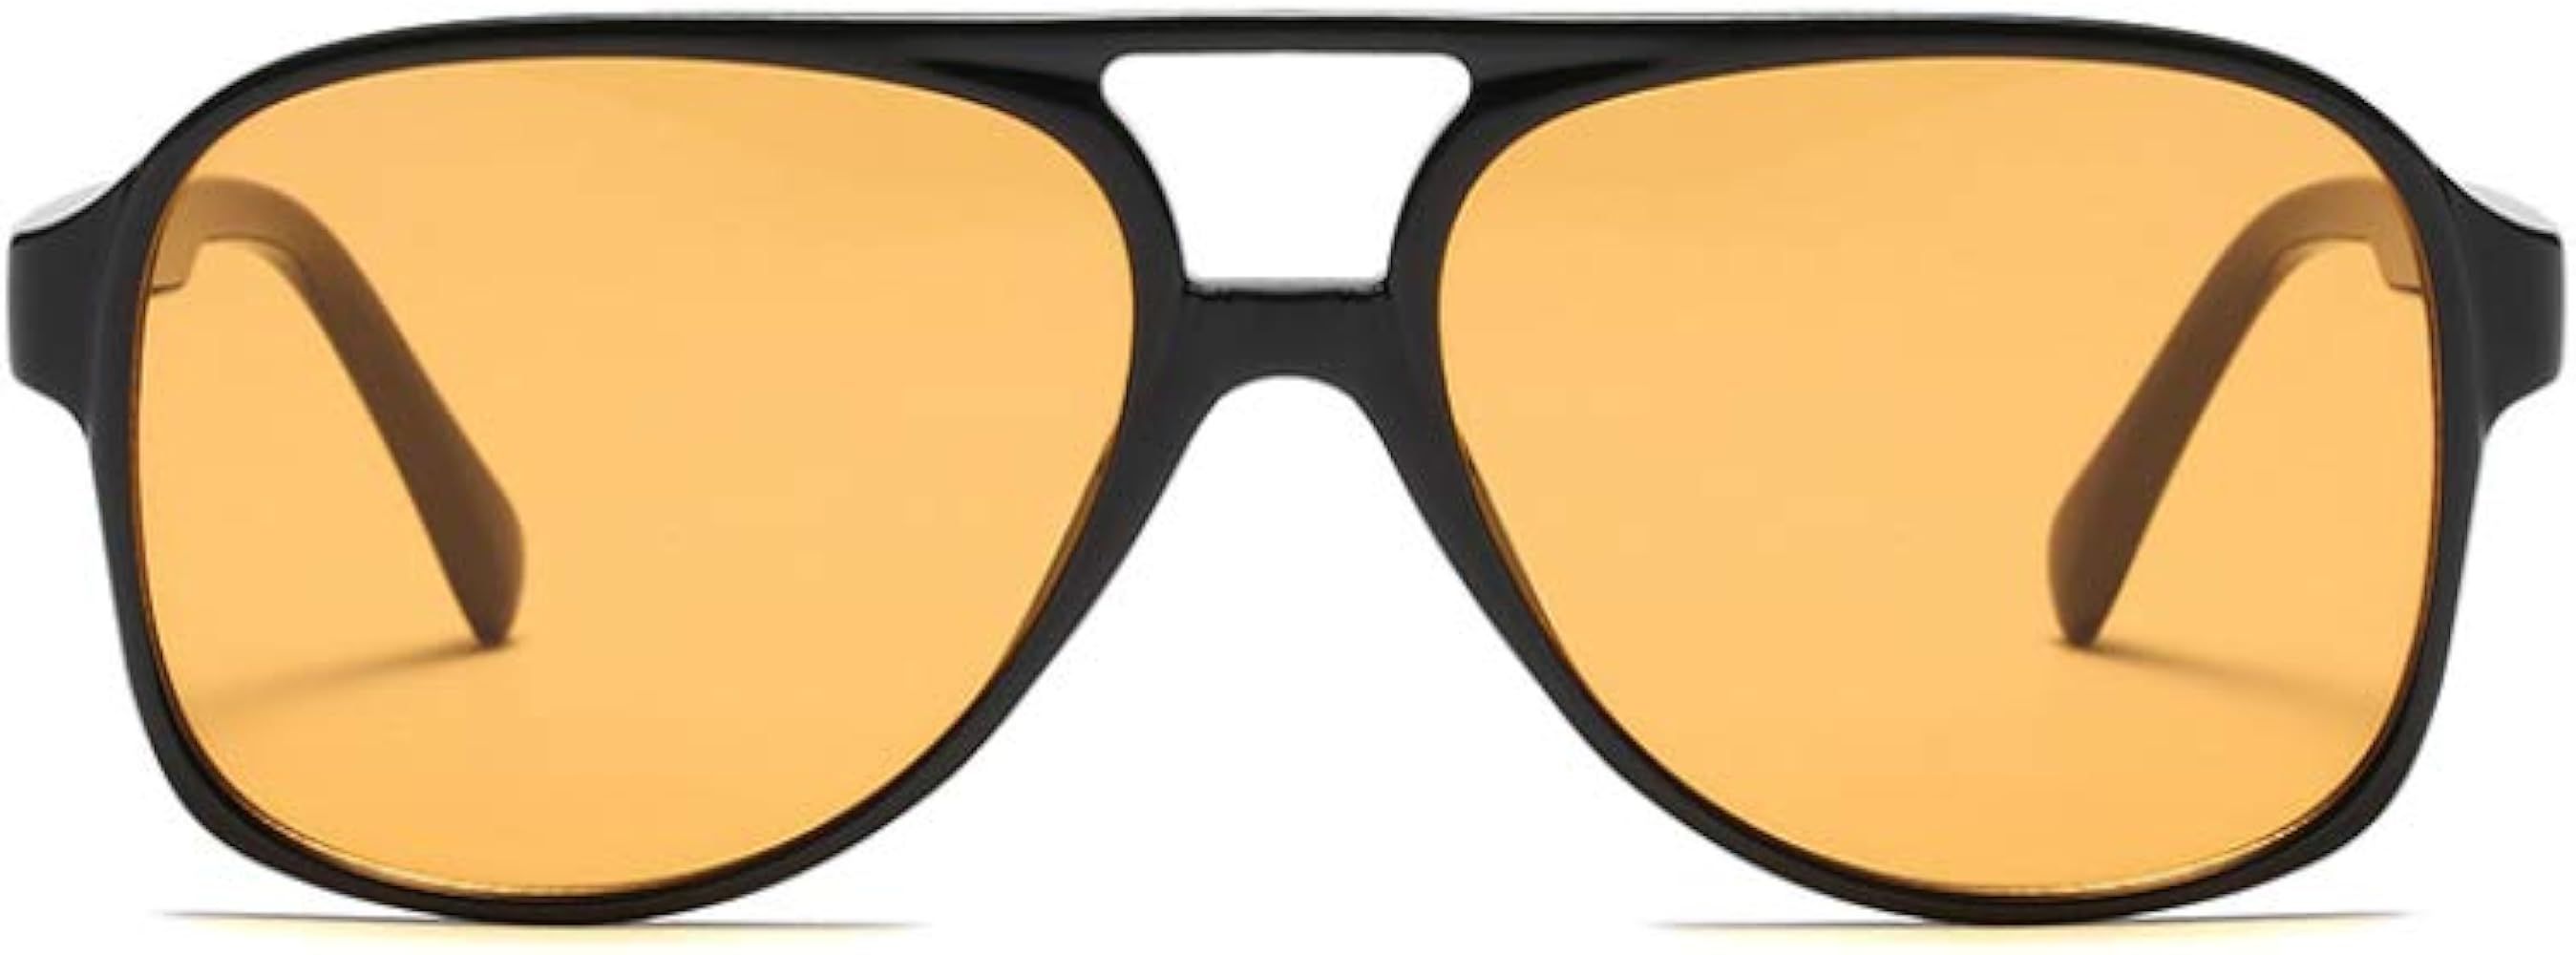 Vintage 1970s Retro Sunglasses | Amazon (US)